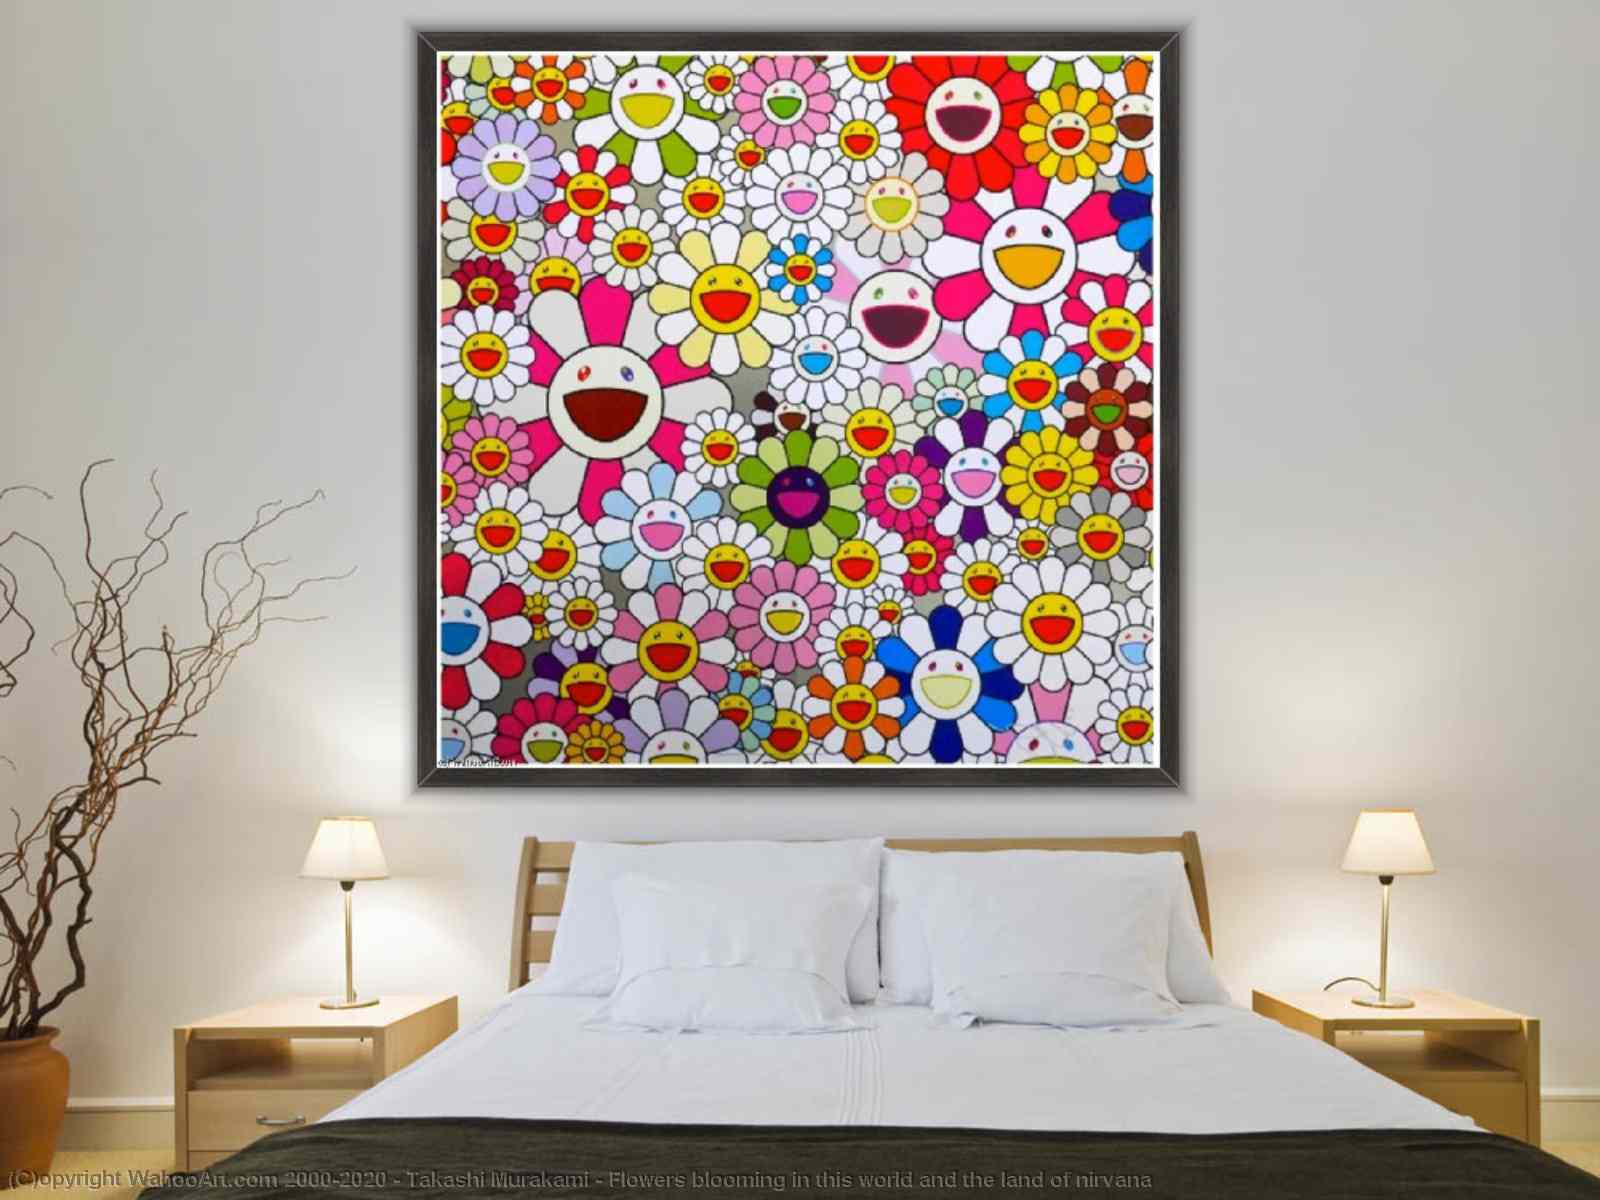 Artbx.org Presents Takashi Murakami Inspired Art! 